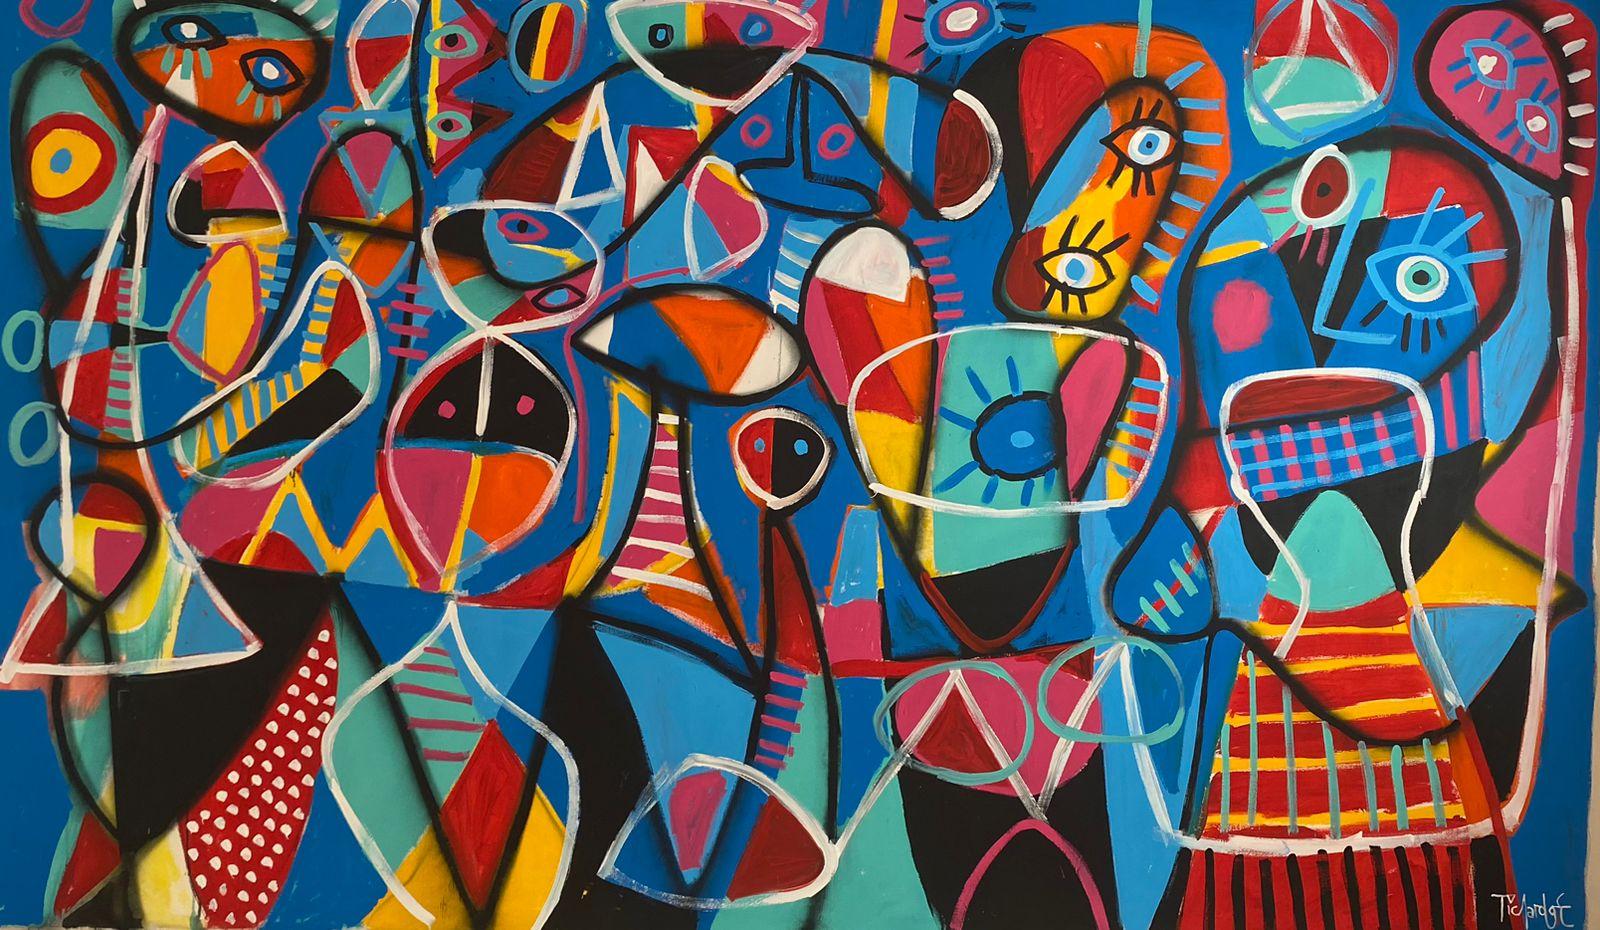 Contemporary Art, Abstract Painting
Acrylic on canvas
205x330cm
Signed 
FREE SHIPPING ROLLED UP




About the artist
Enrique Pichardo (Mexico City, 1973) graduated from Escuela Nacional de Pintura, Escultura y Grabado (ENPEG) “La Esmeralda”. As a